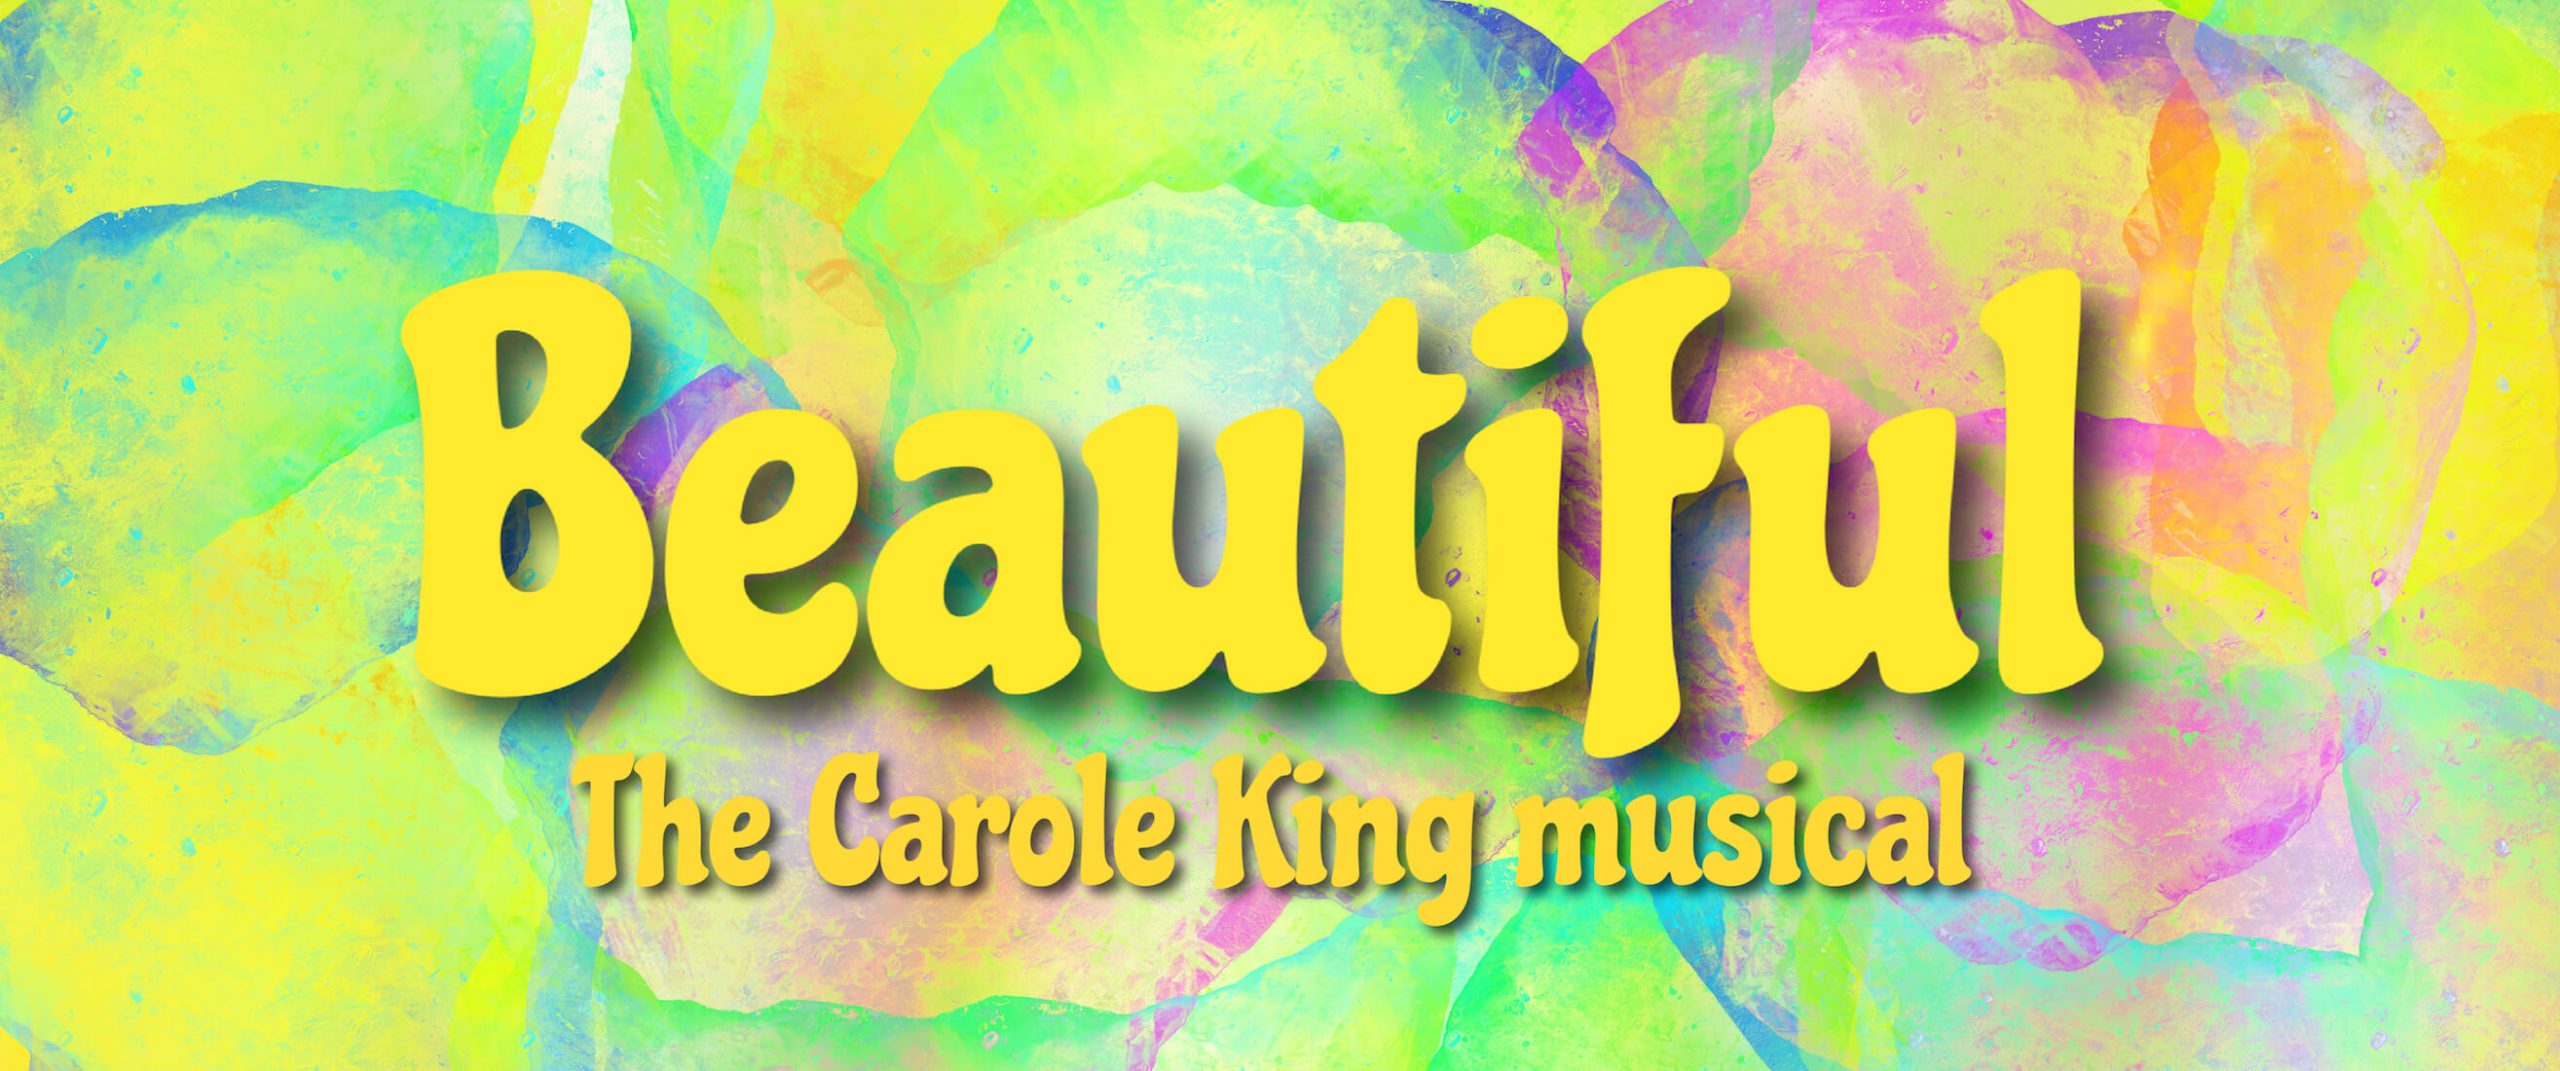 beautiful a carole king musical